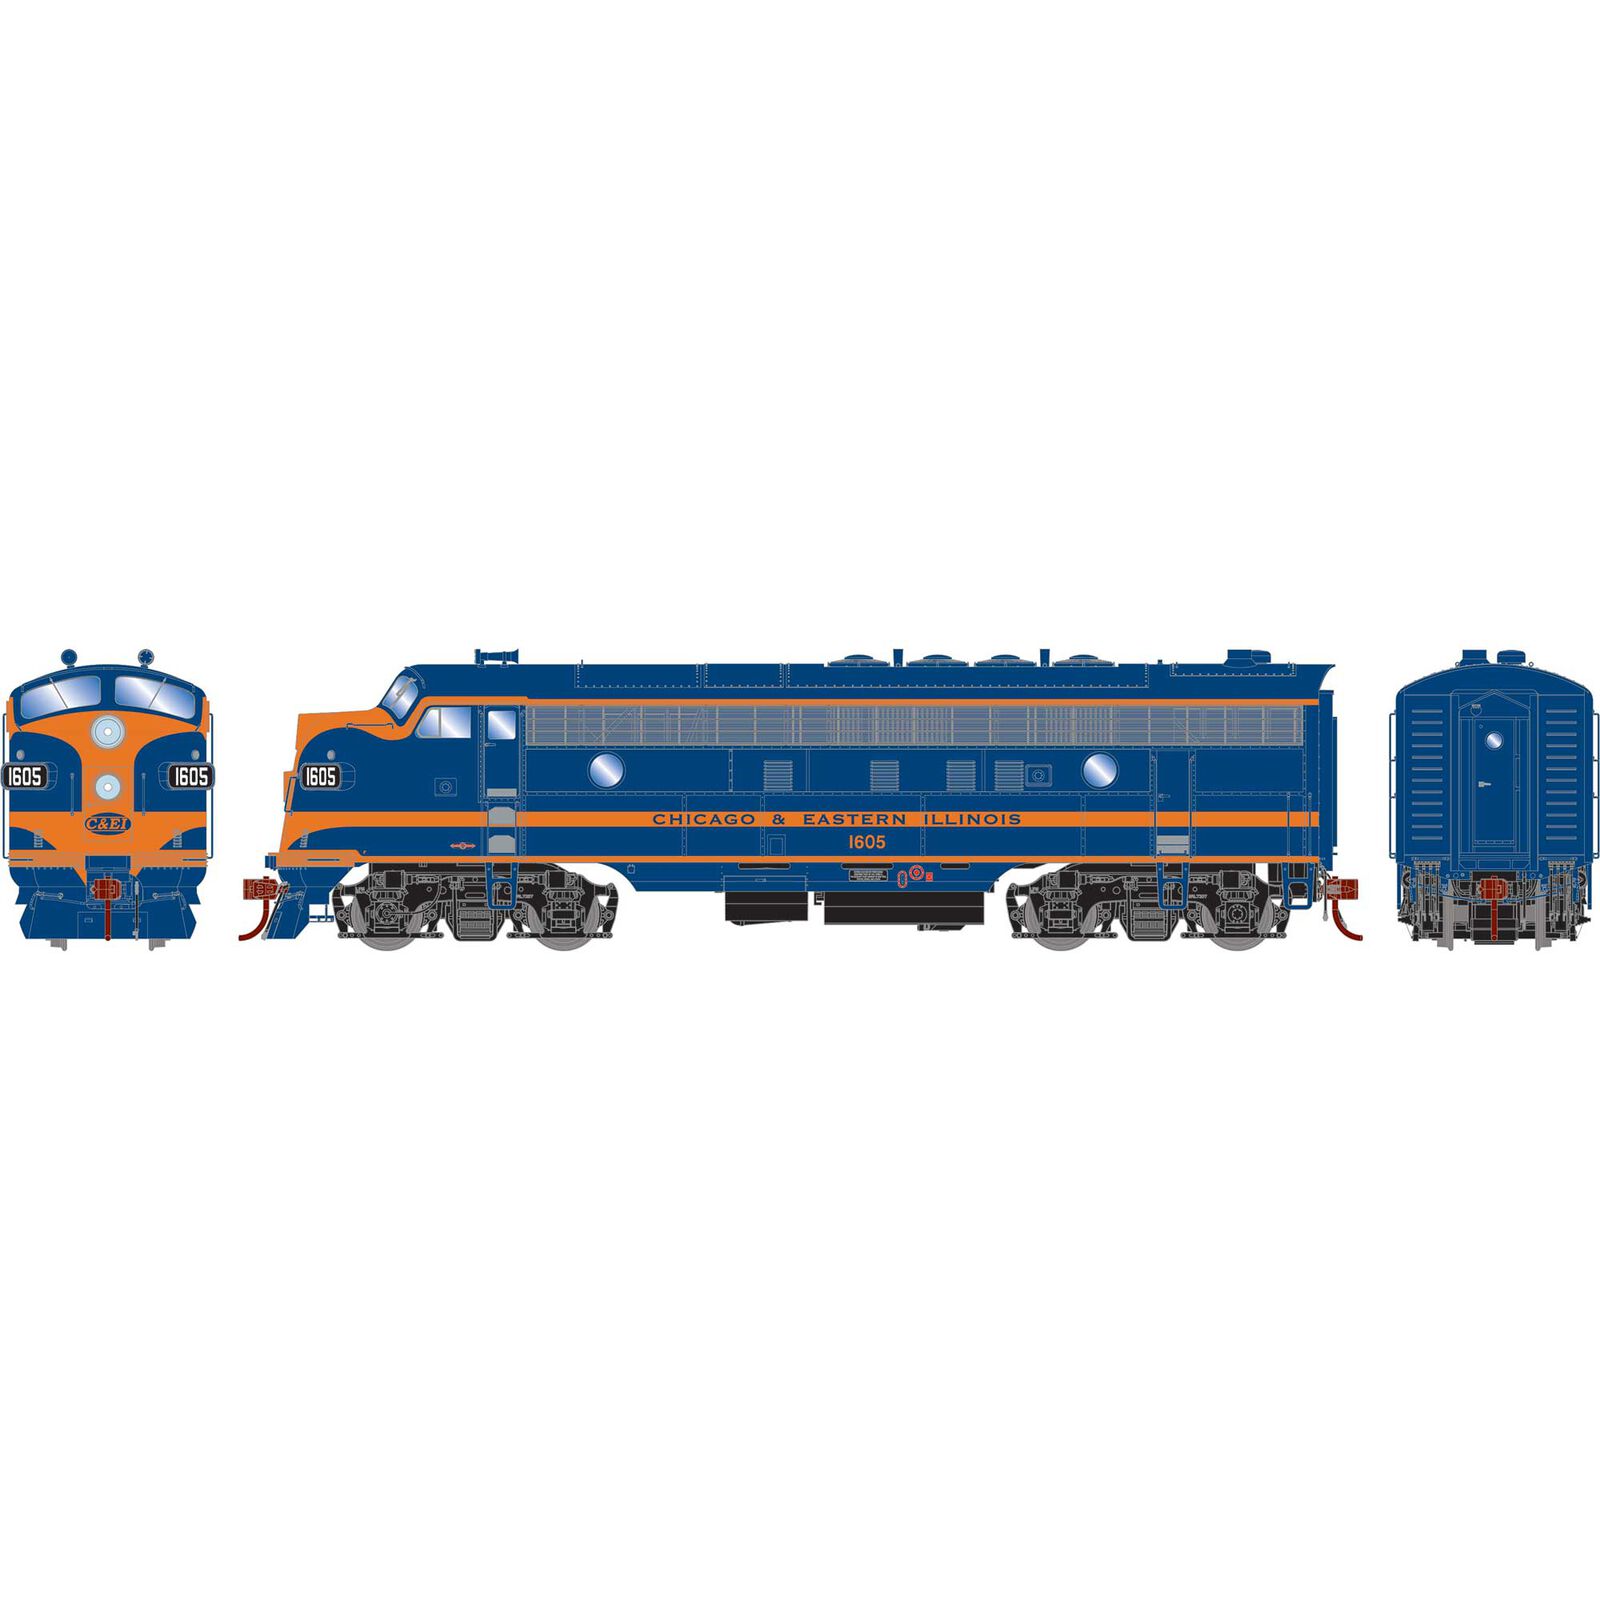 HO FP7 Locomotive with DCC & Sound, CEI #1605